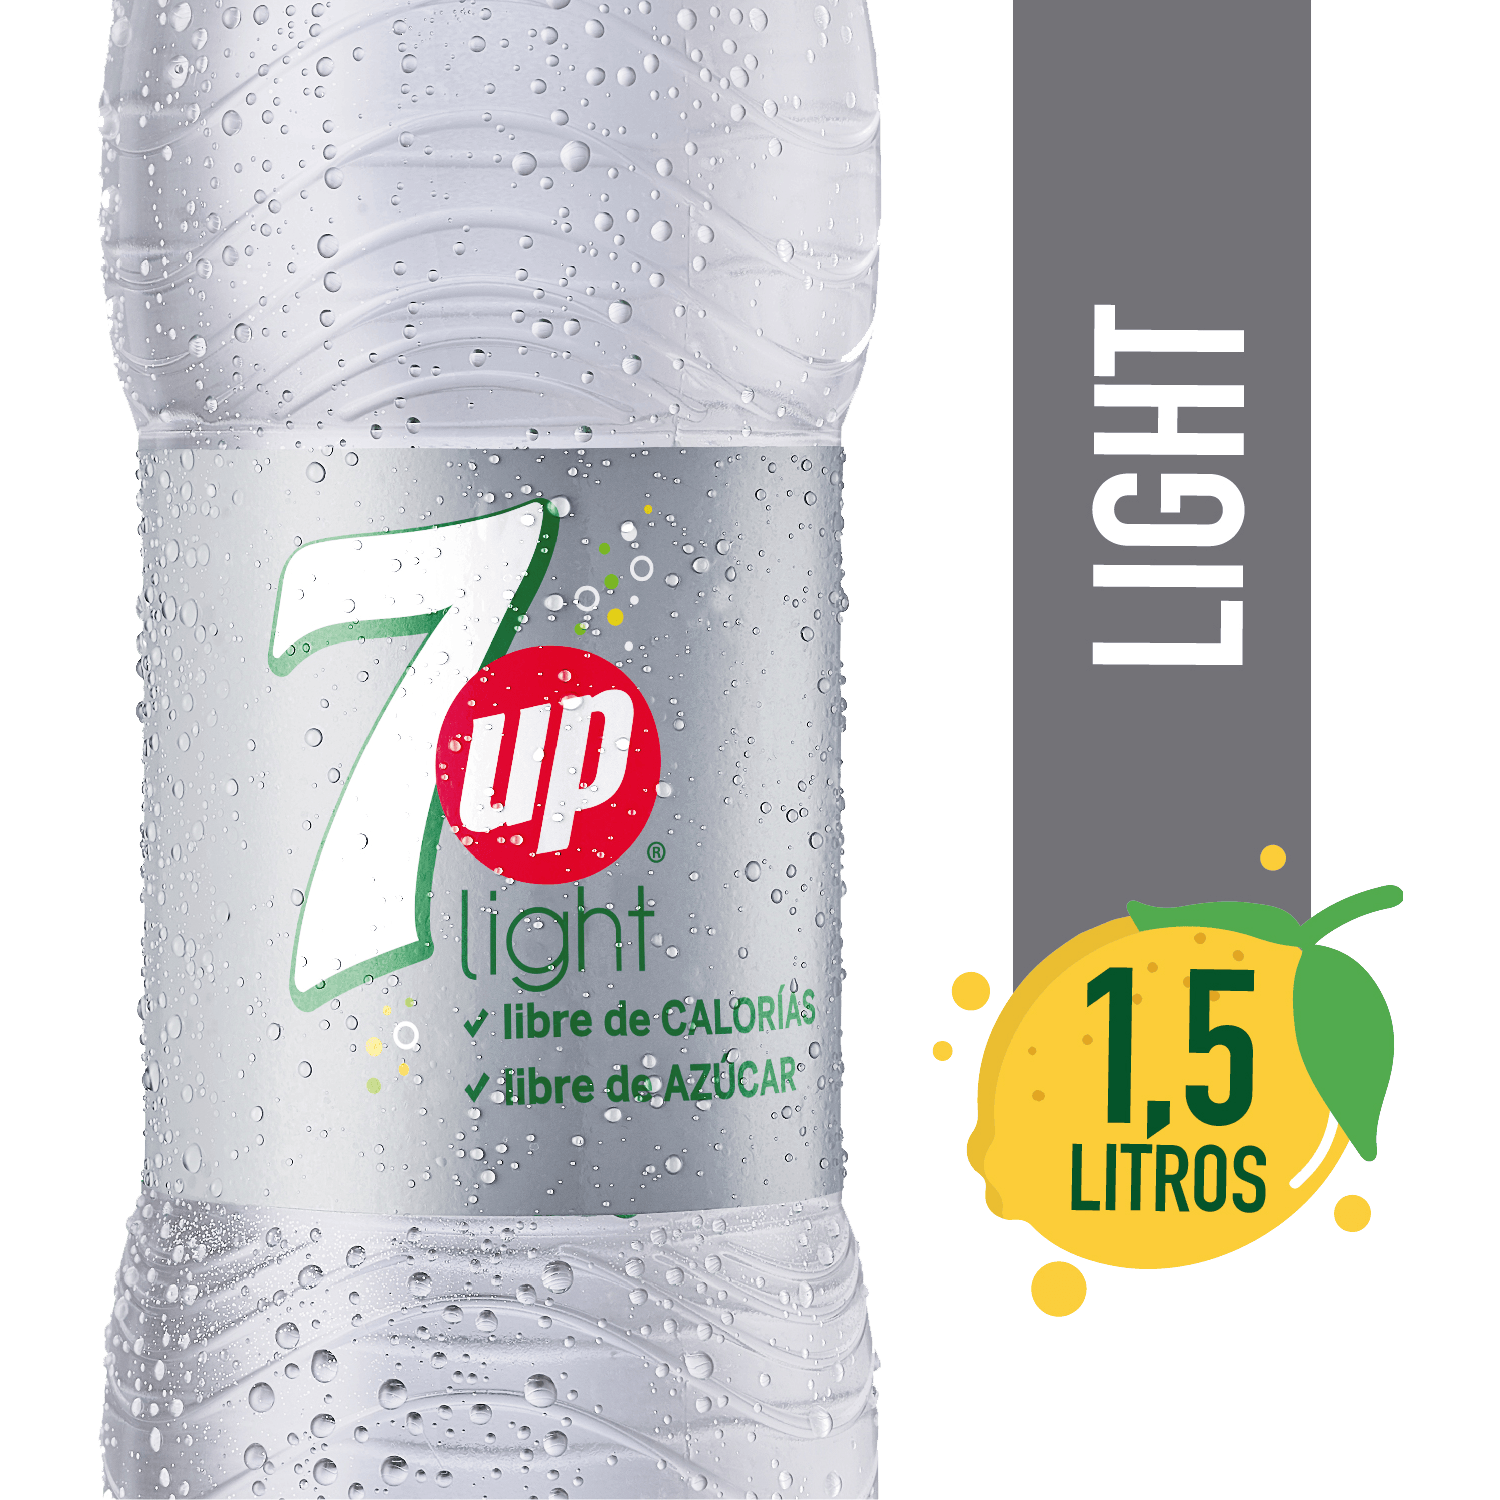 Comprar 7 up botella 2 litros sevenup seven up Tienda Online